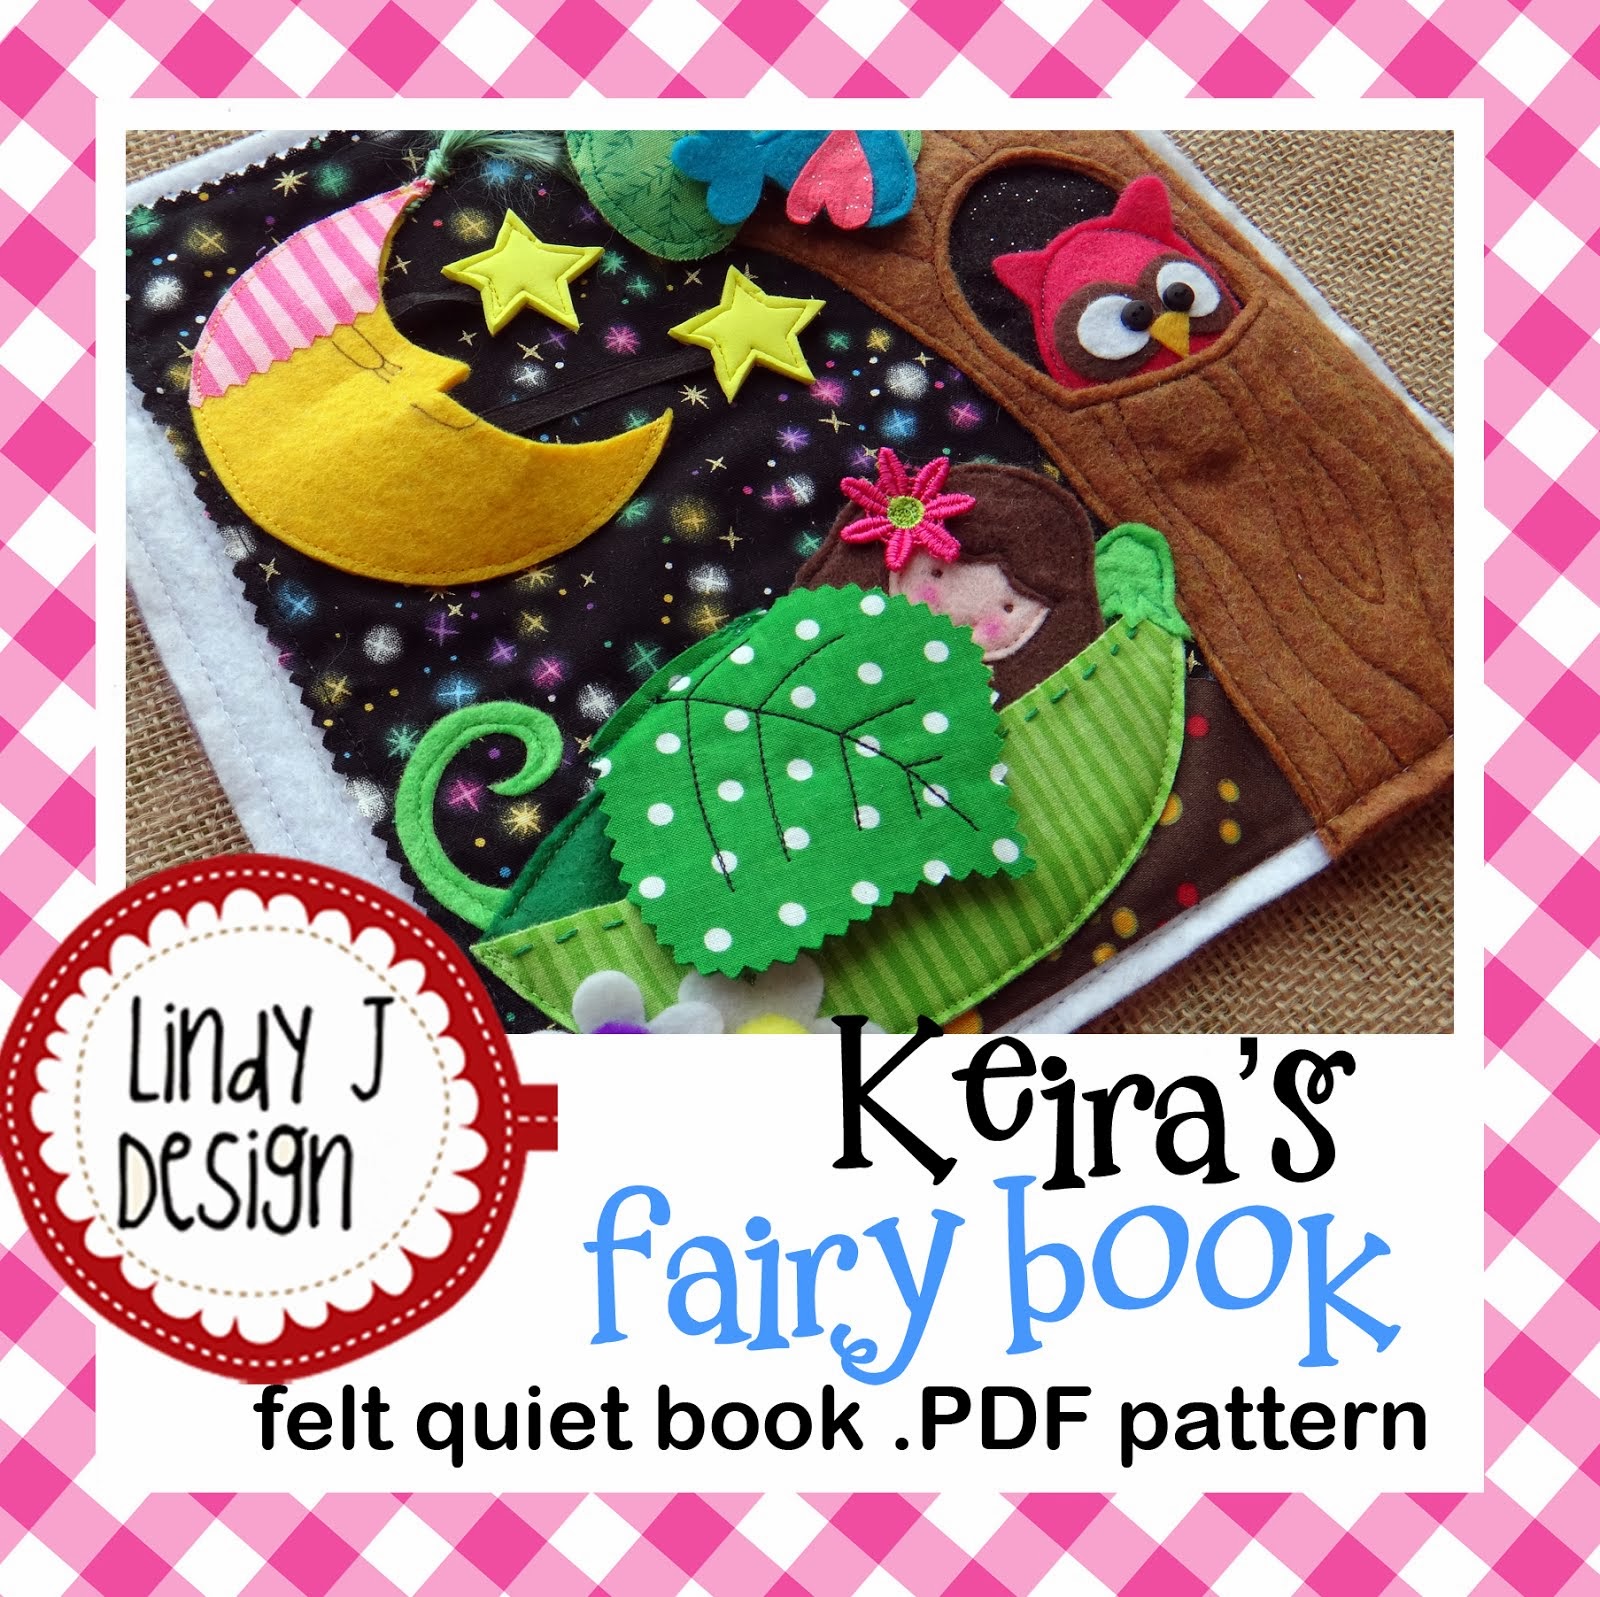 Keira's Fairy Book .PDF Pattern